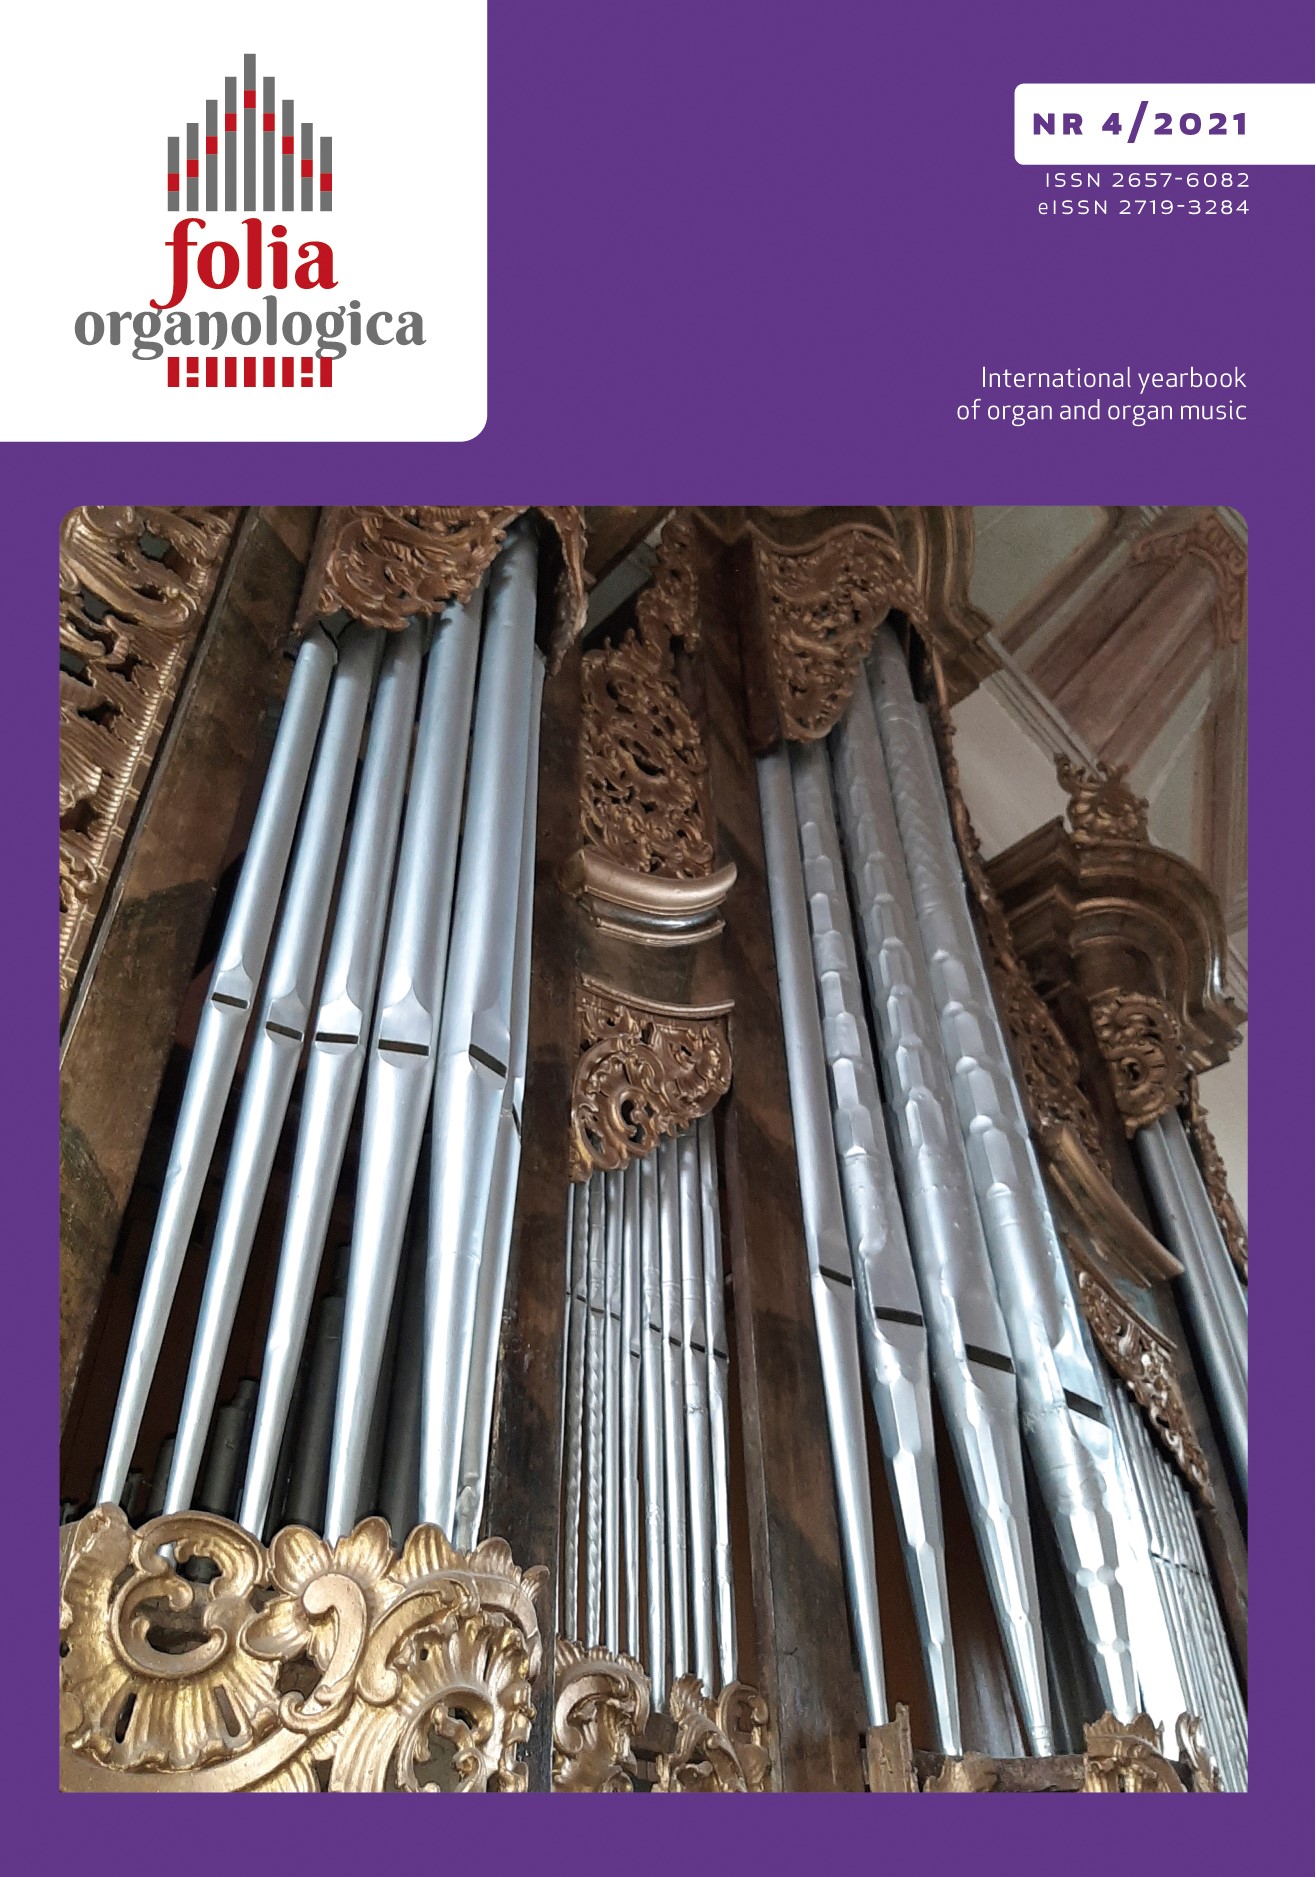 Organy na Śląsku VII, J. Gembalski (ed.), Vol. 7, Katowice:
The Karol Szymanowski Academy of Music in Katowice 2020, pp. ISBN 978-83-955787-6-2. Cover Image